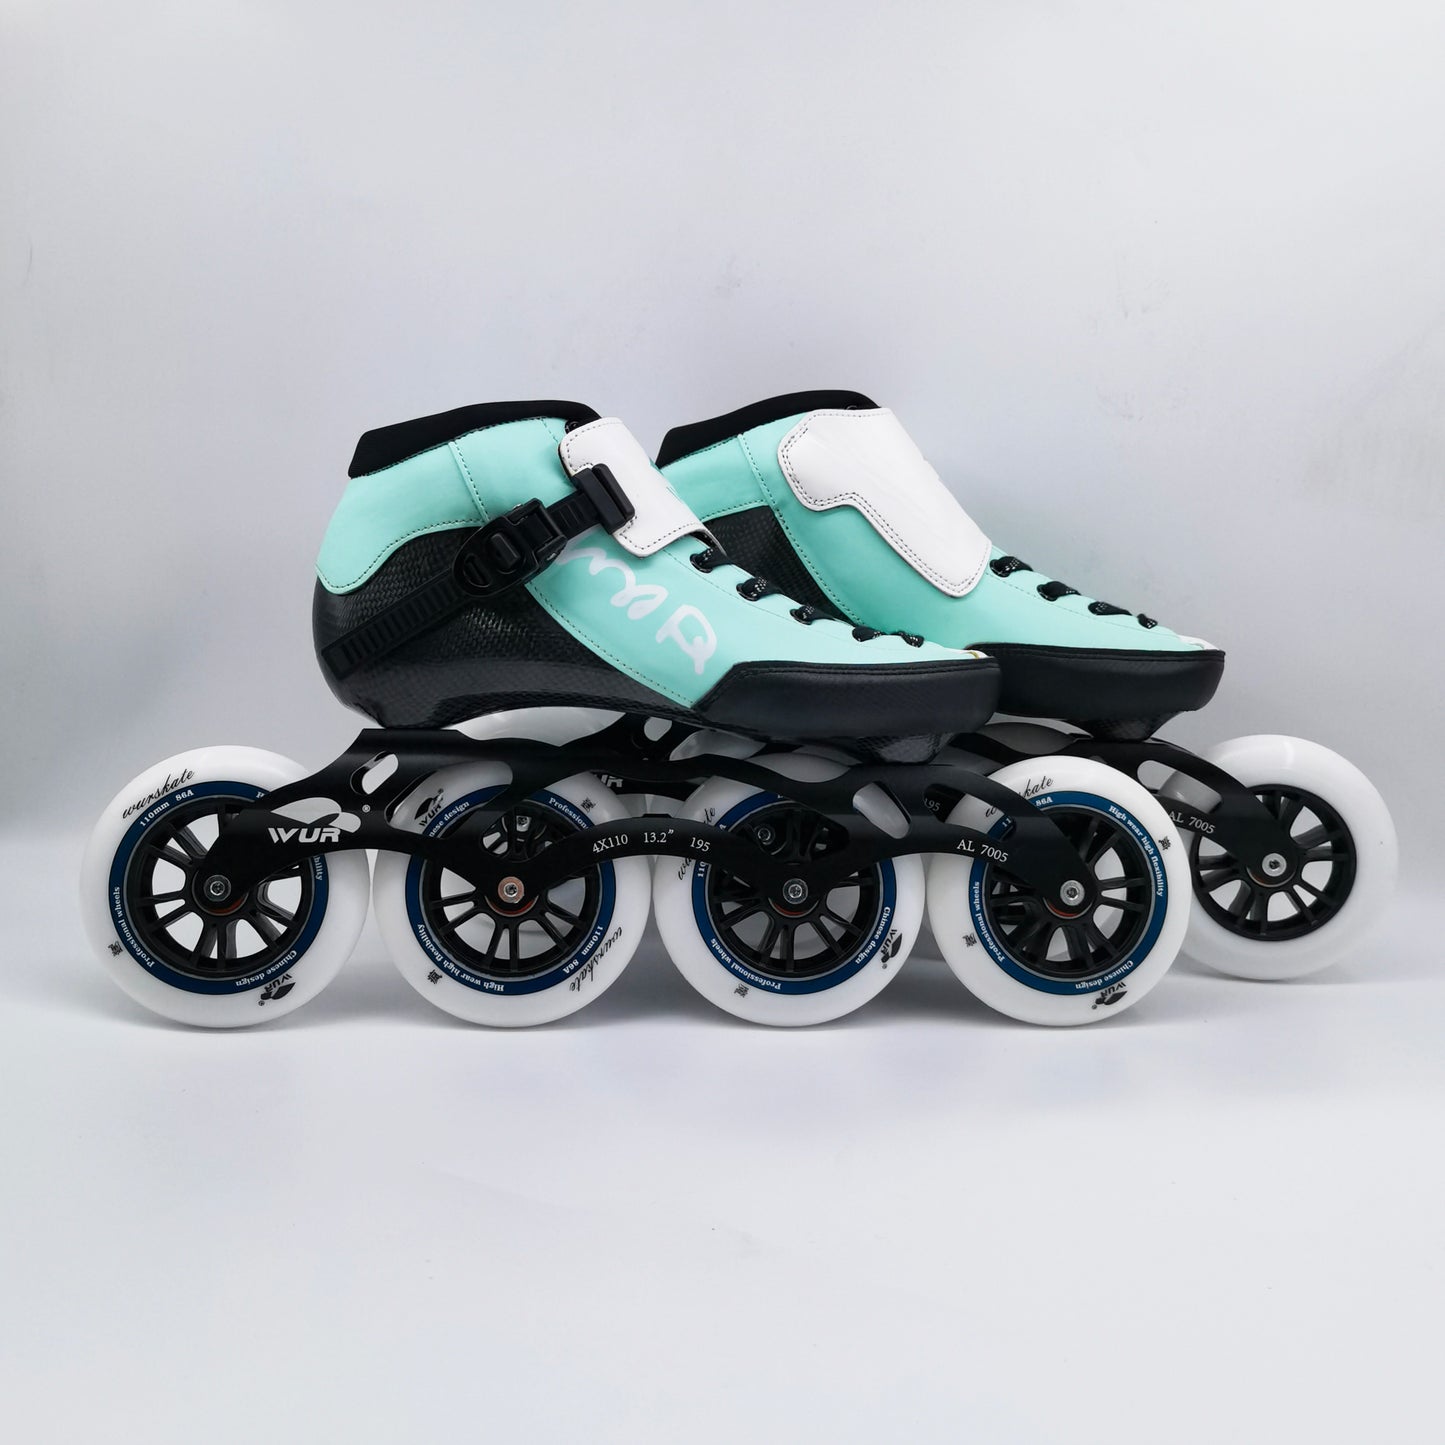 WUR skate speed skate model CX mint